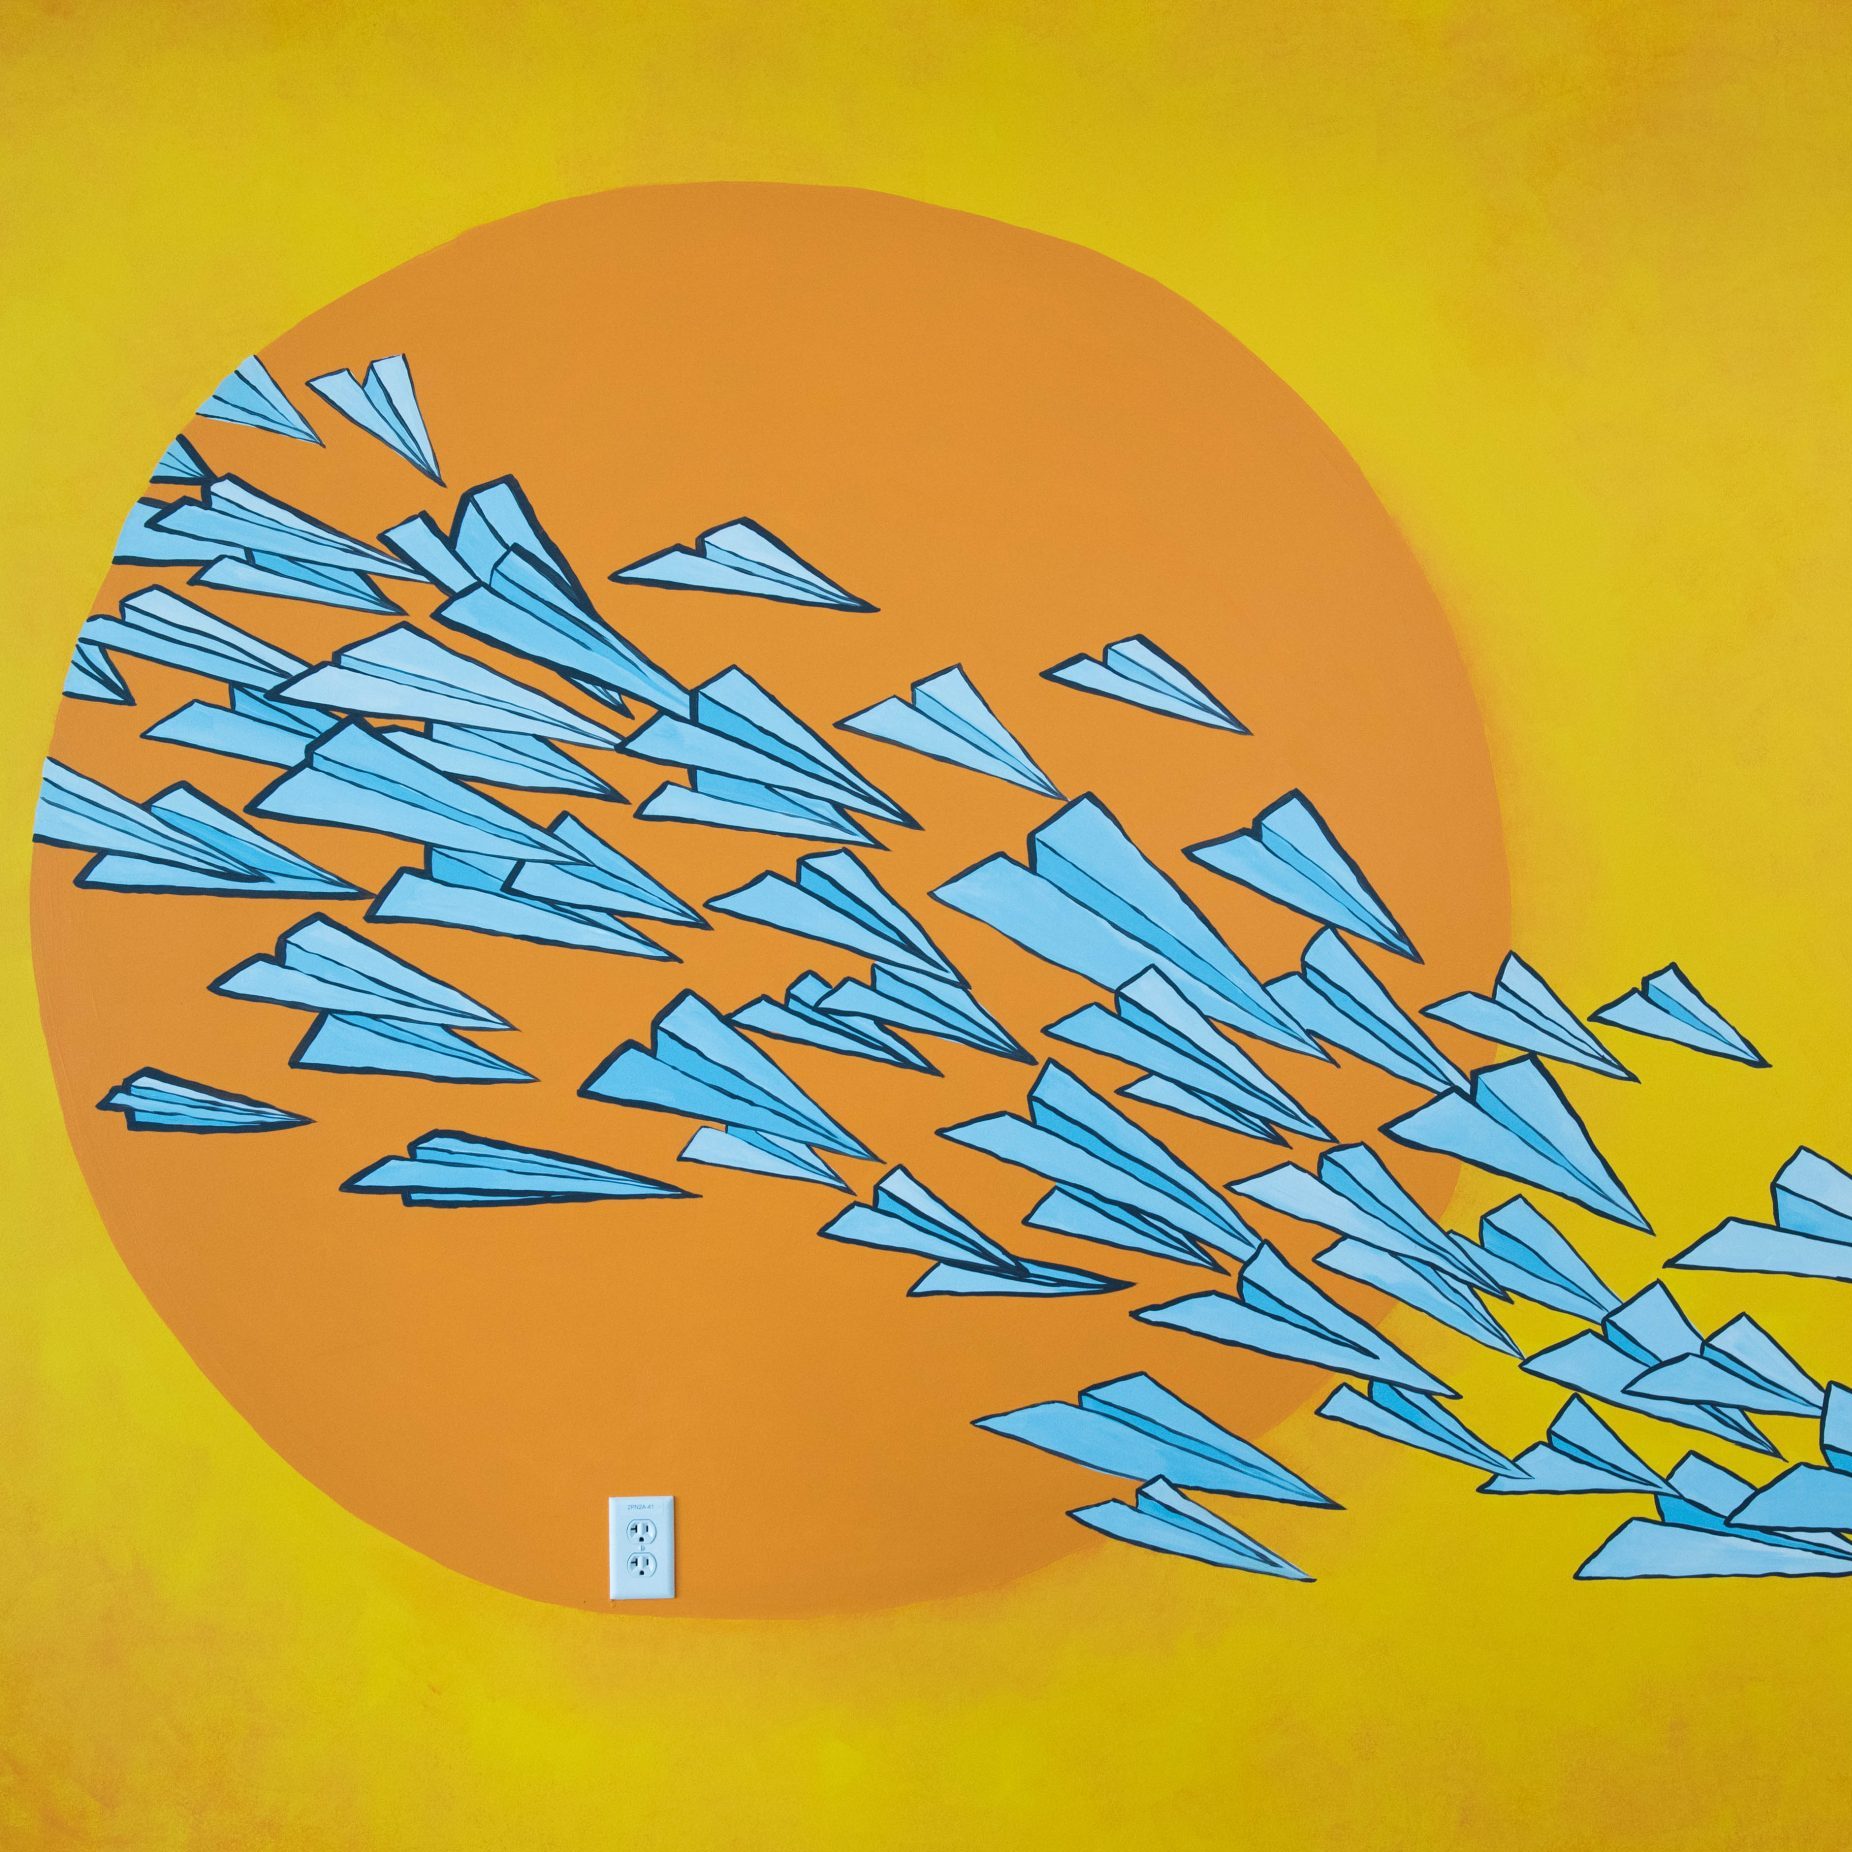 Artistic illustration of paper planes 